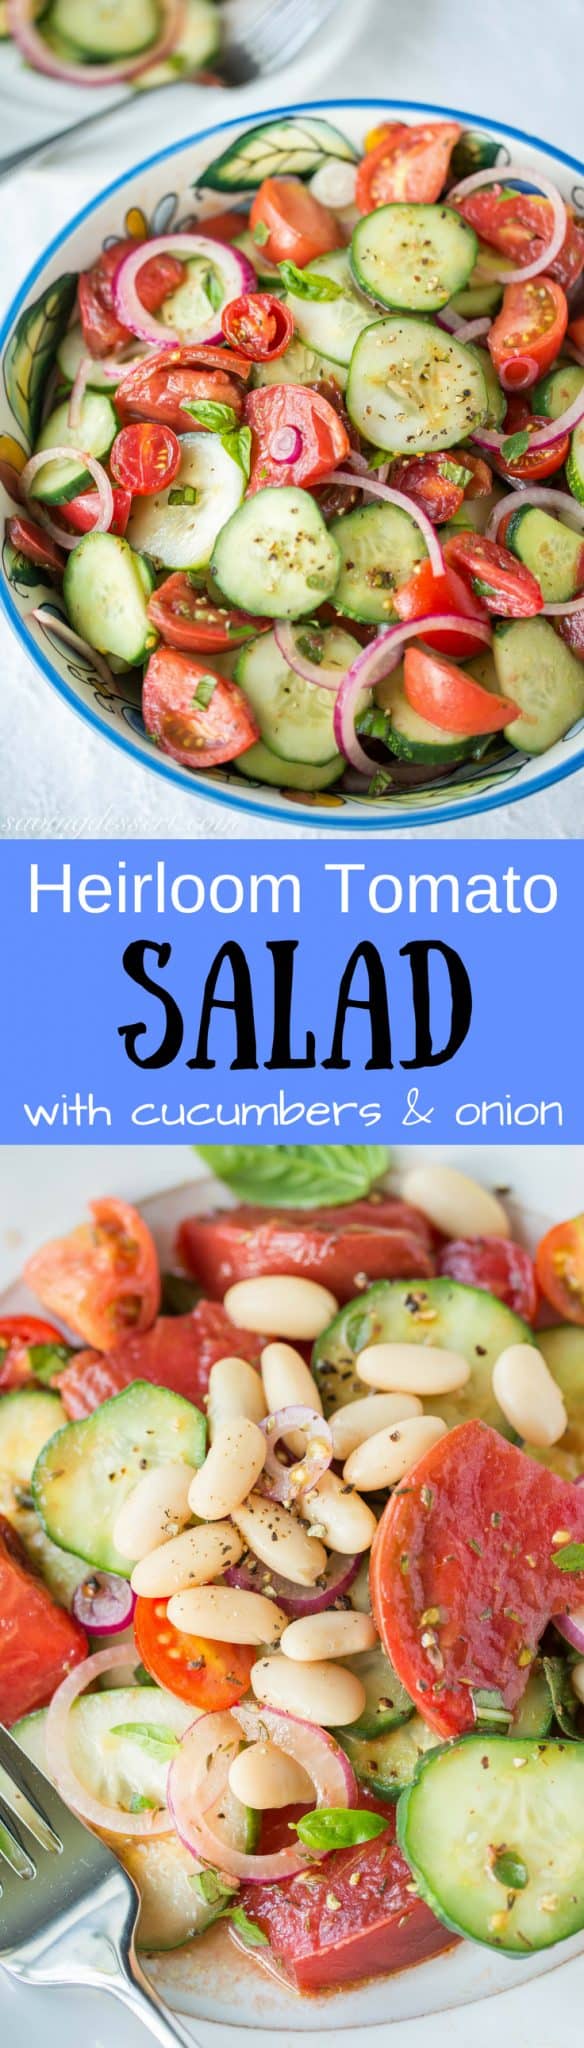  Heirloom Tomato Salad with cucumbers & onion (garden-to-table)  www.savingdessert.com